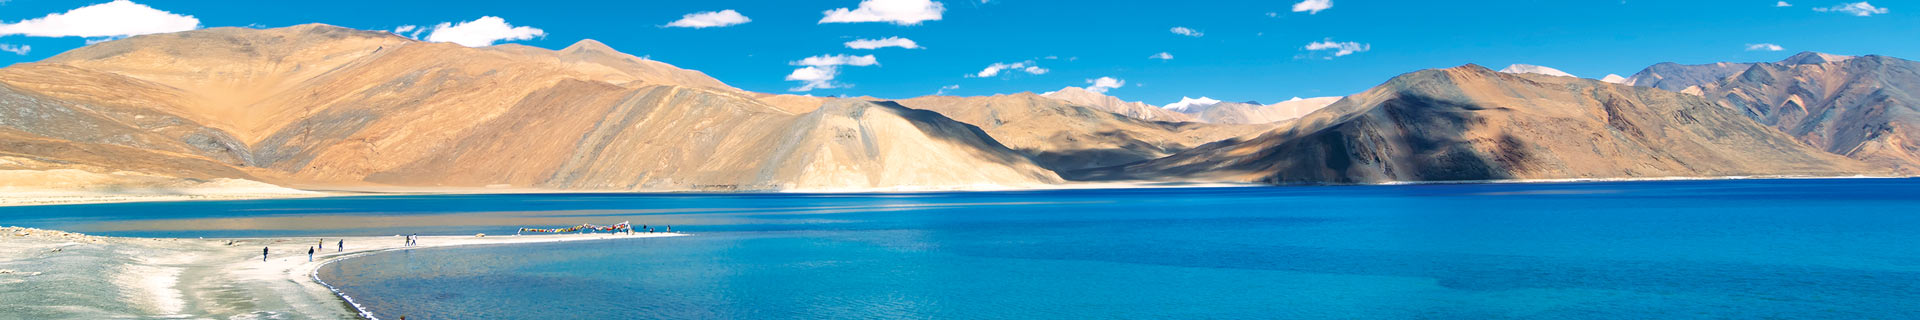 leh ladakh travel guide